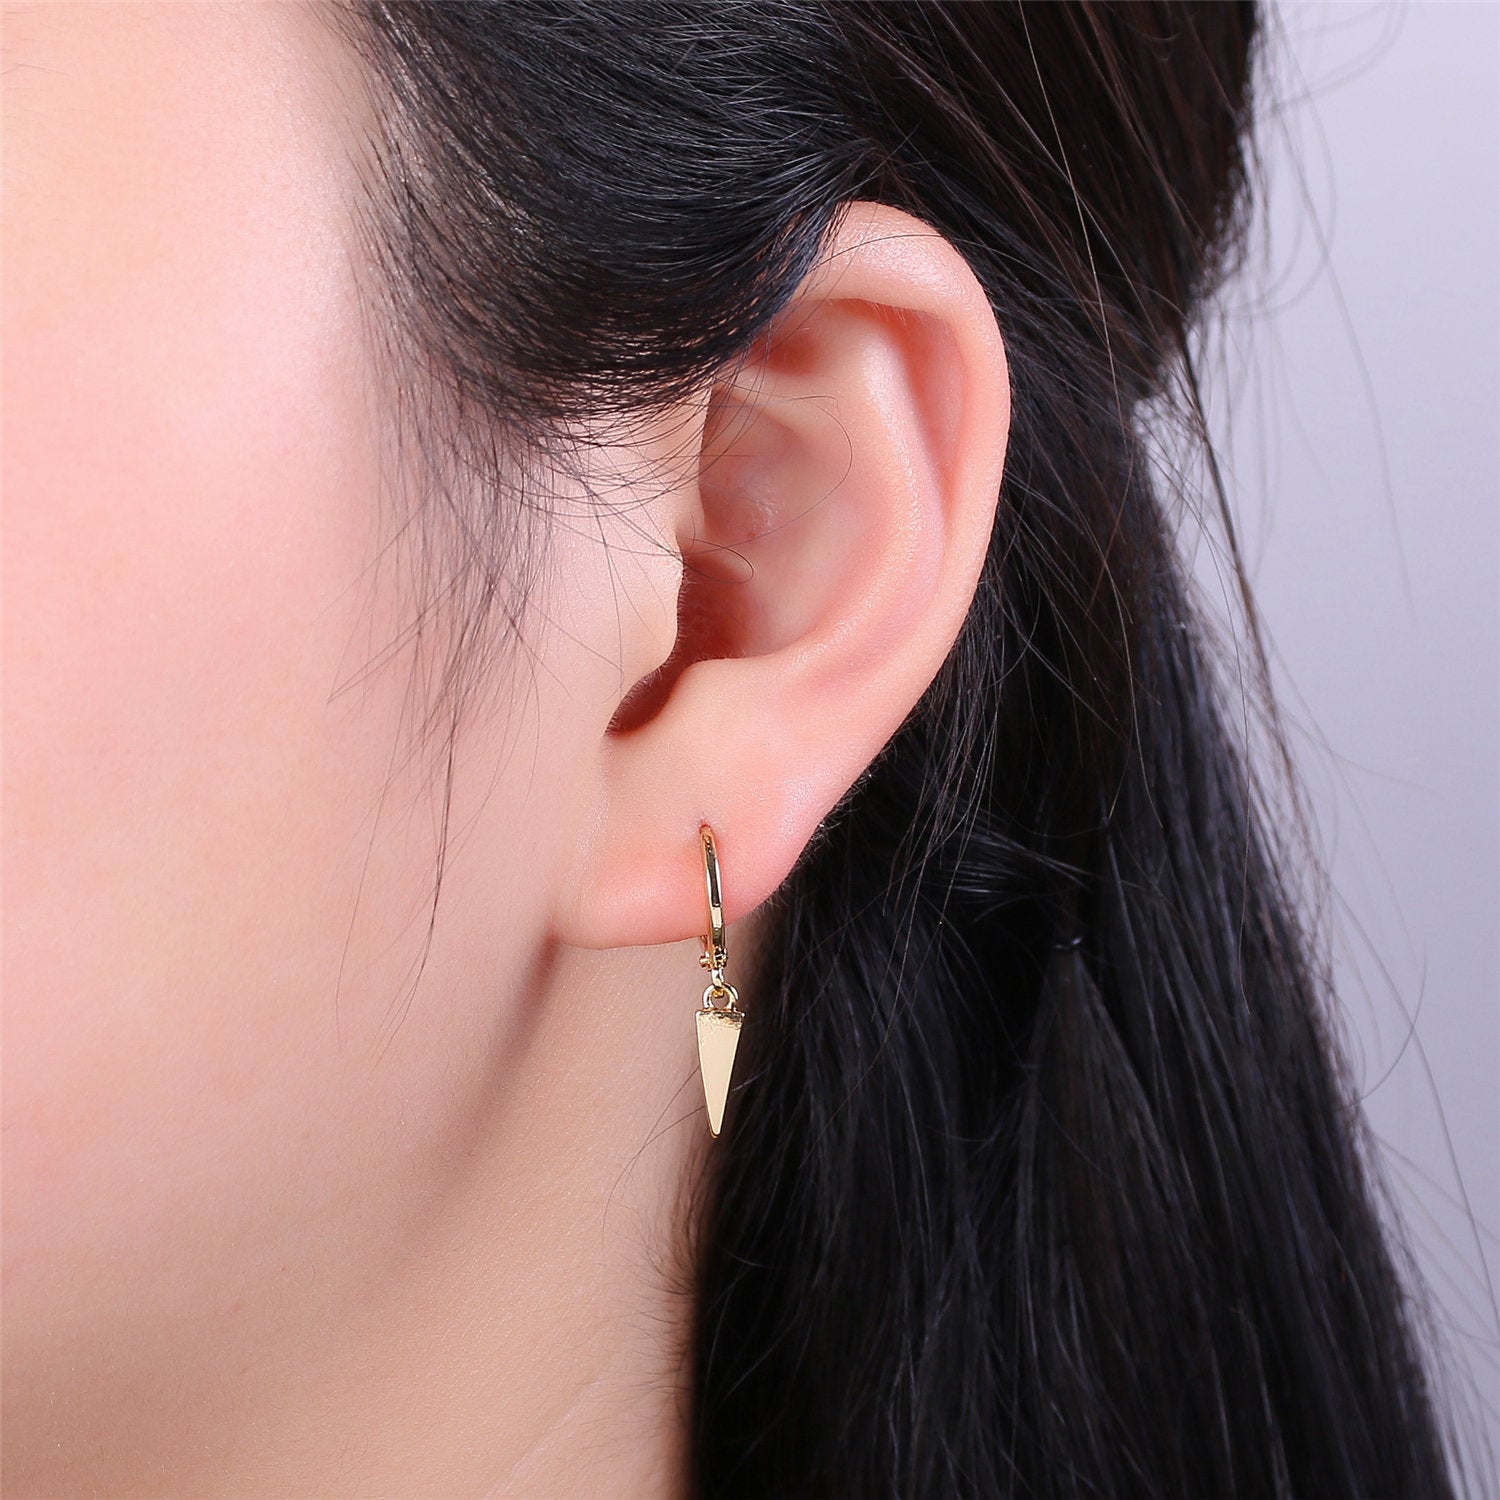 Gold spike earring, Spike hoop earrings, Spike huggie, Gift for her, Tiny hoop earrings, bridesmaid gift, Dangle earrings Charm - DLUXCA